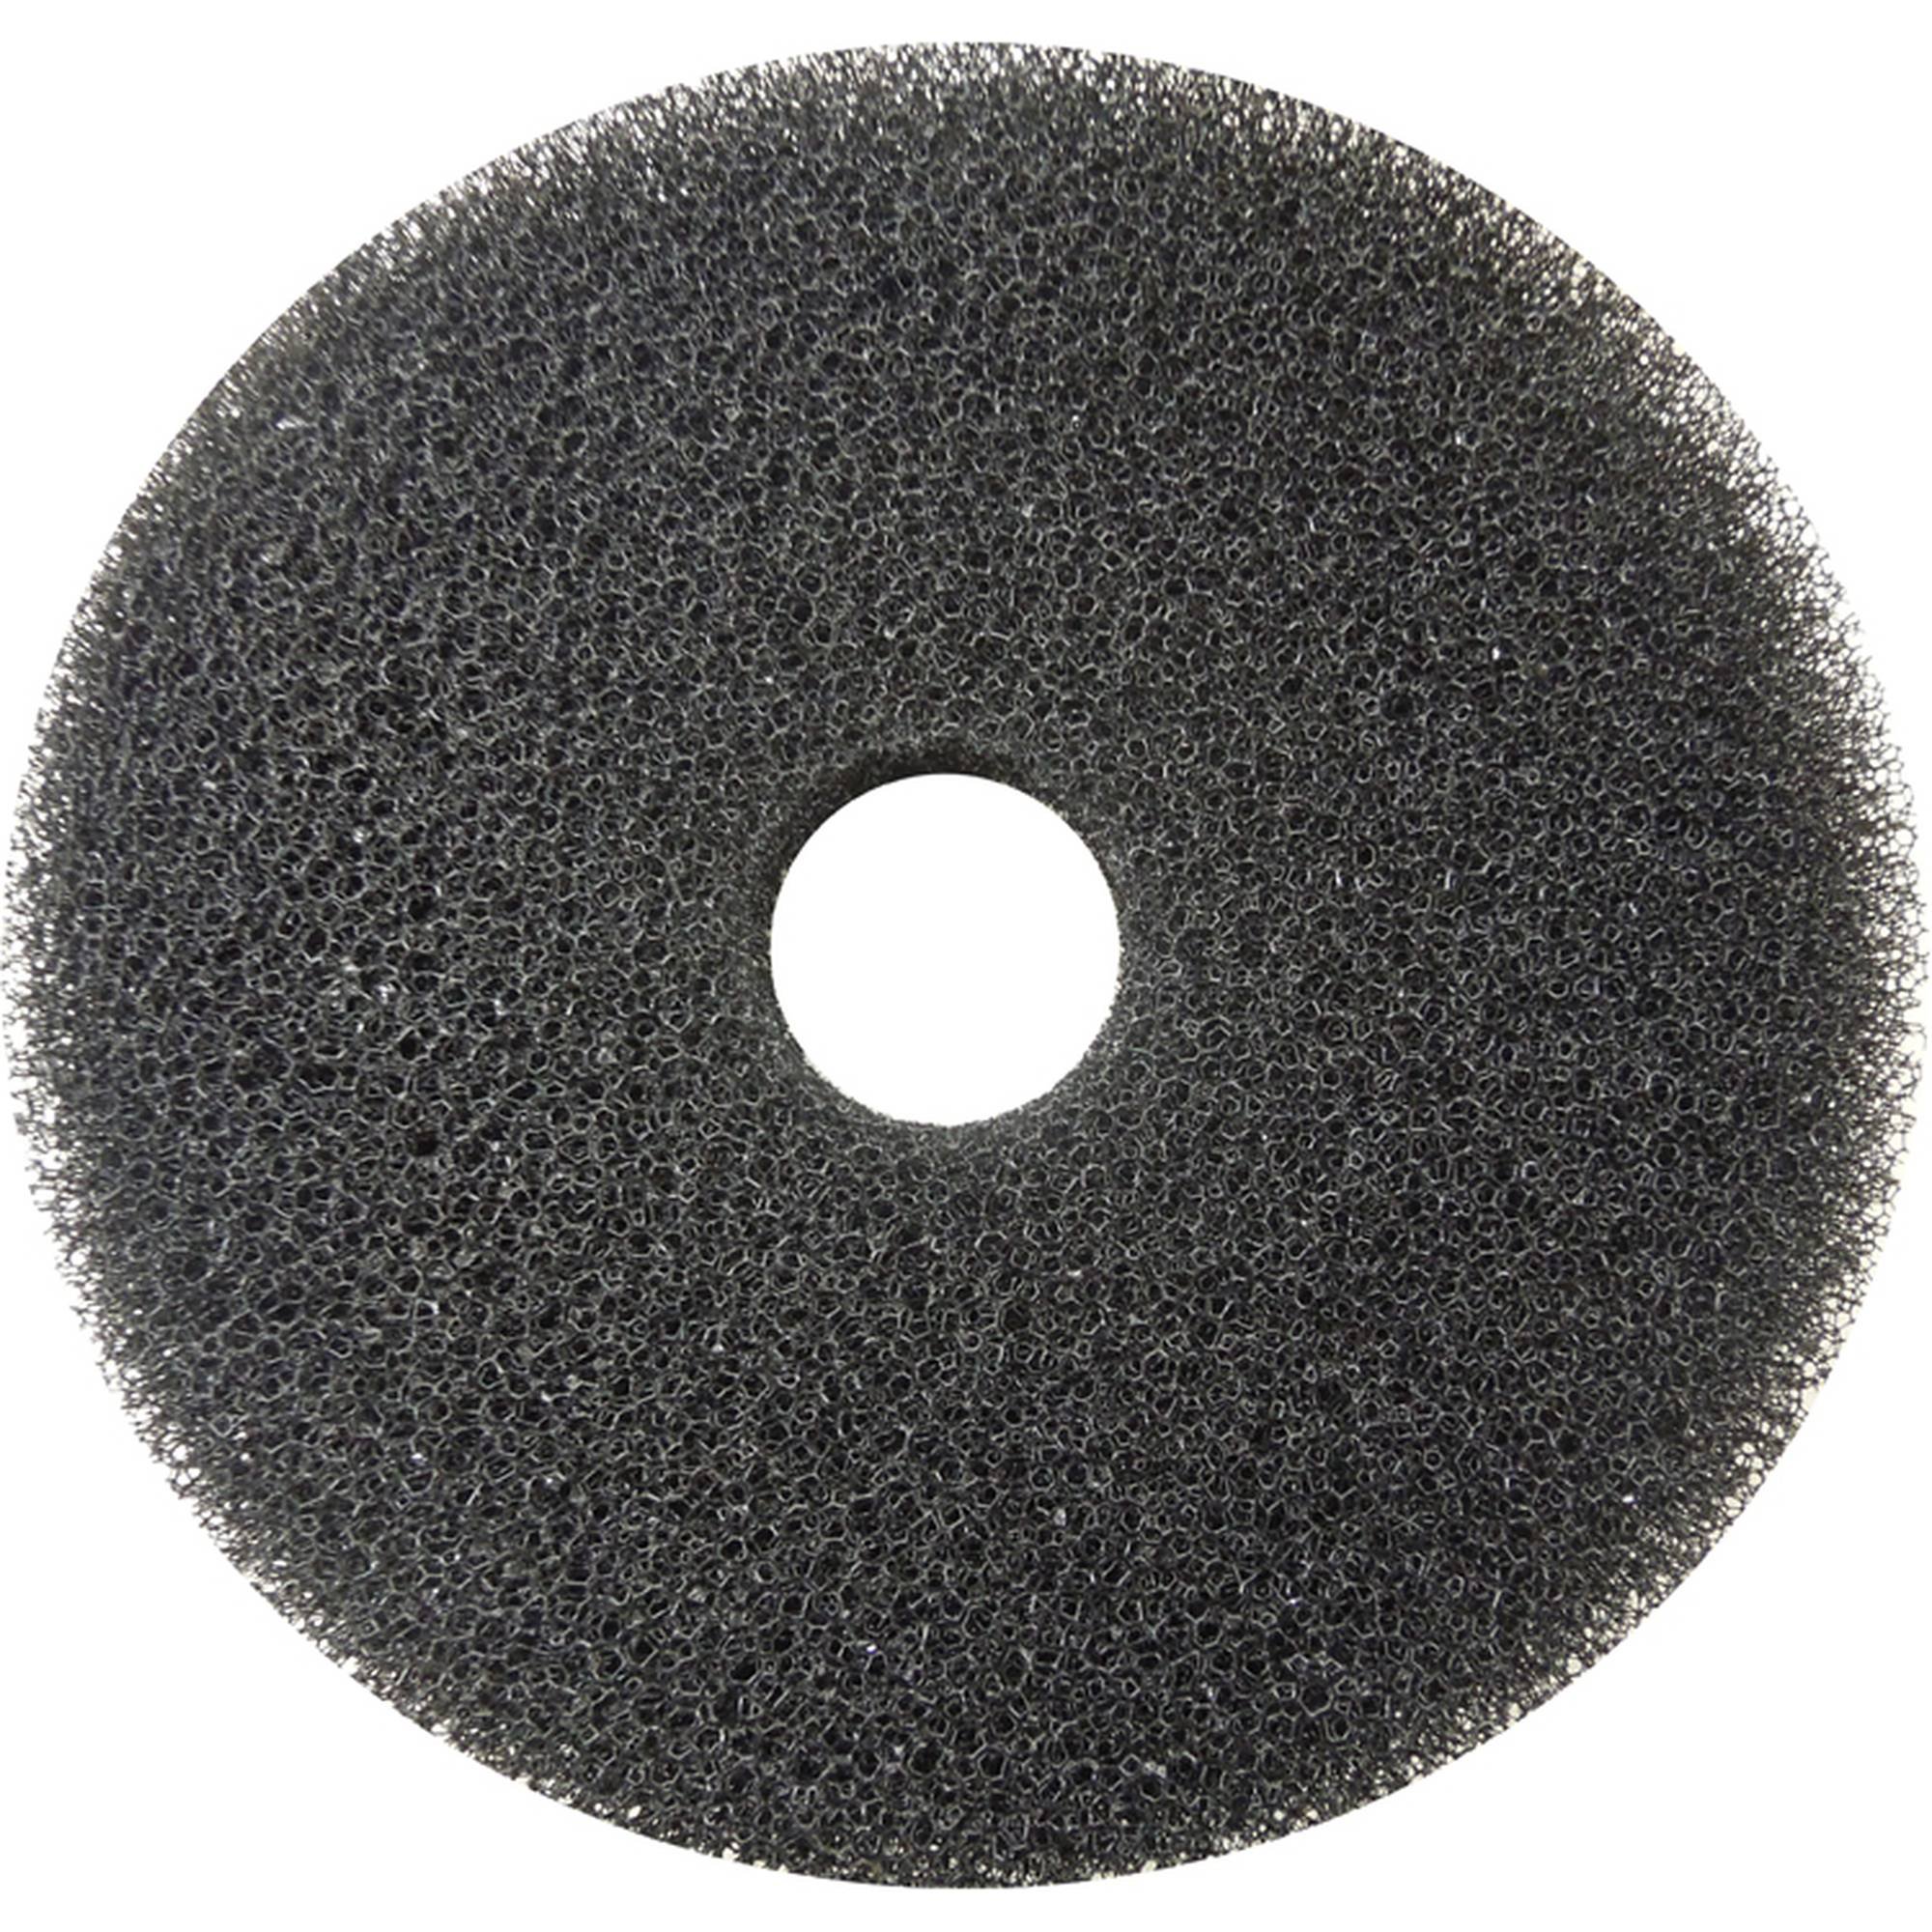 Filtersponge rough/black FPU10000-00